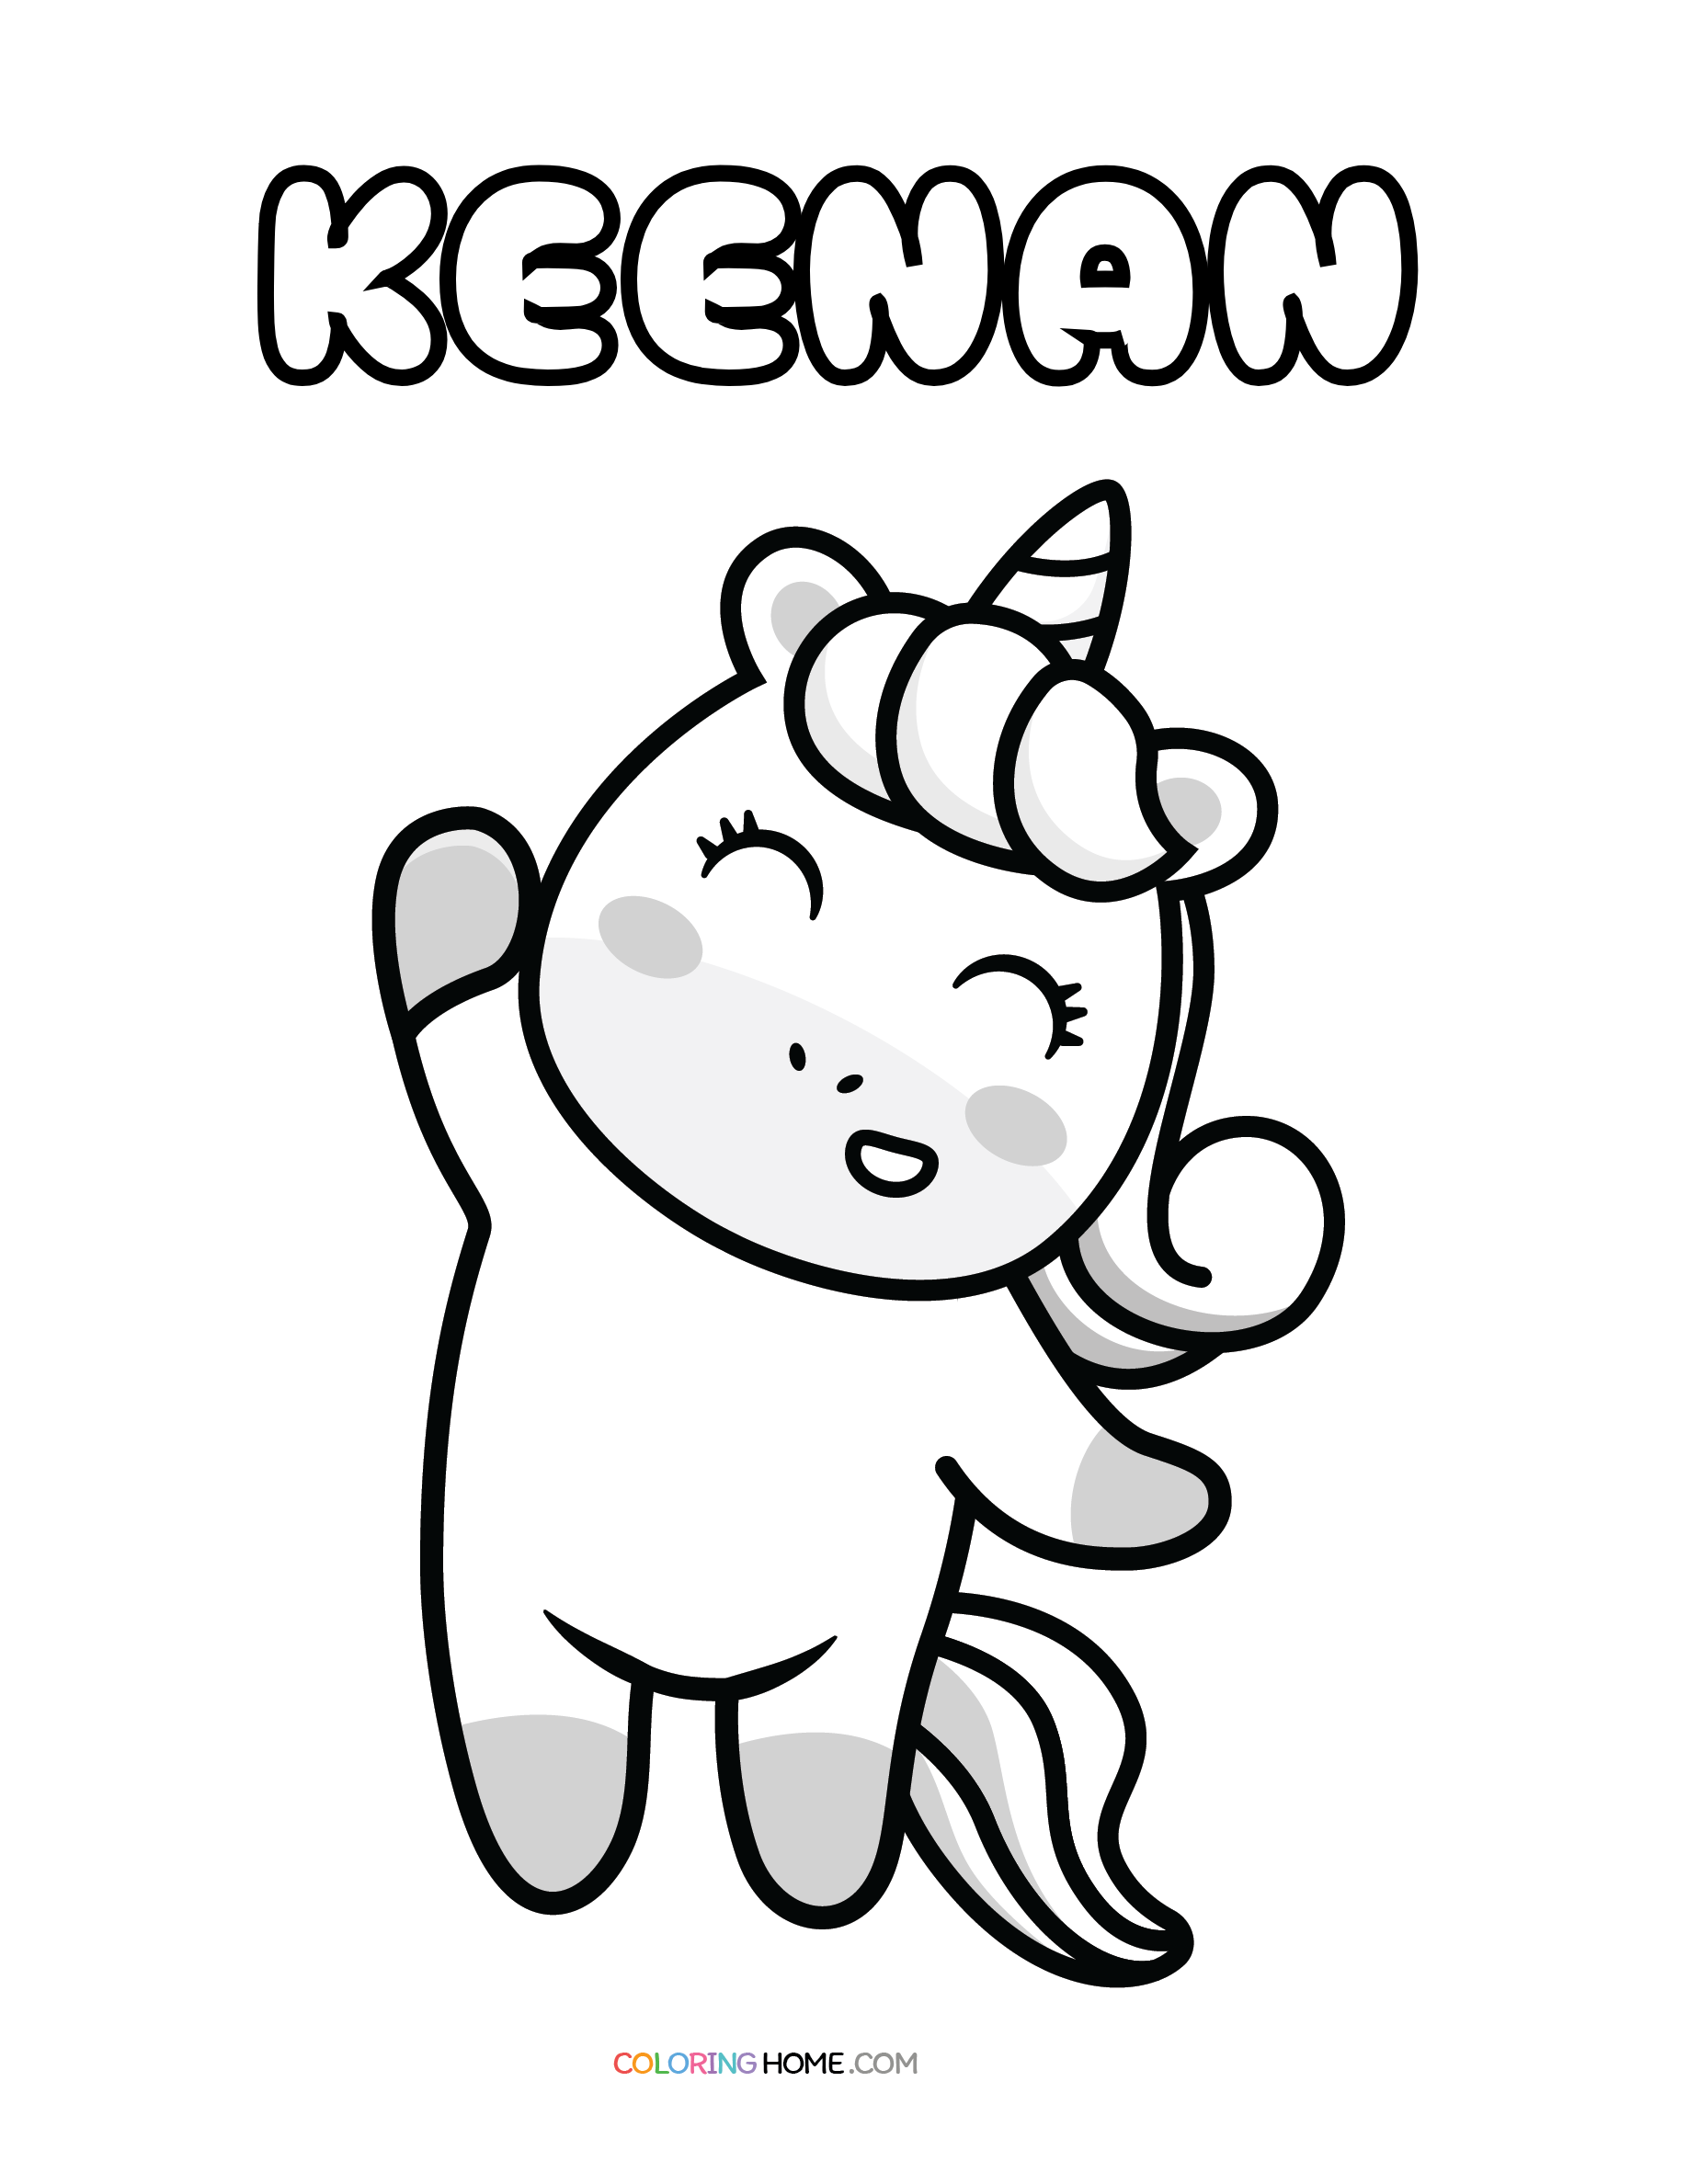 Keenan unicorn coloring page